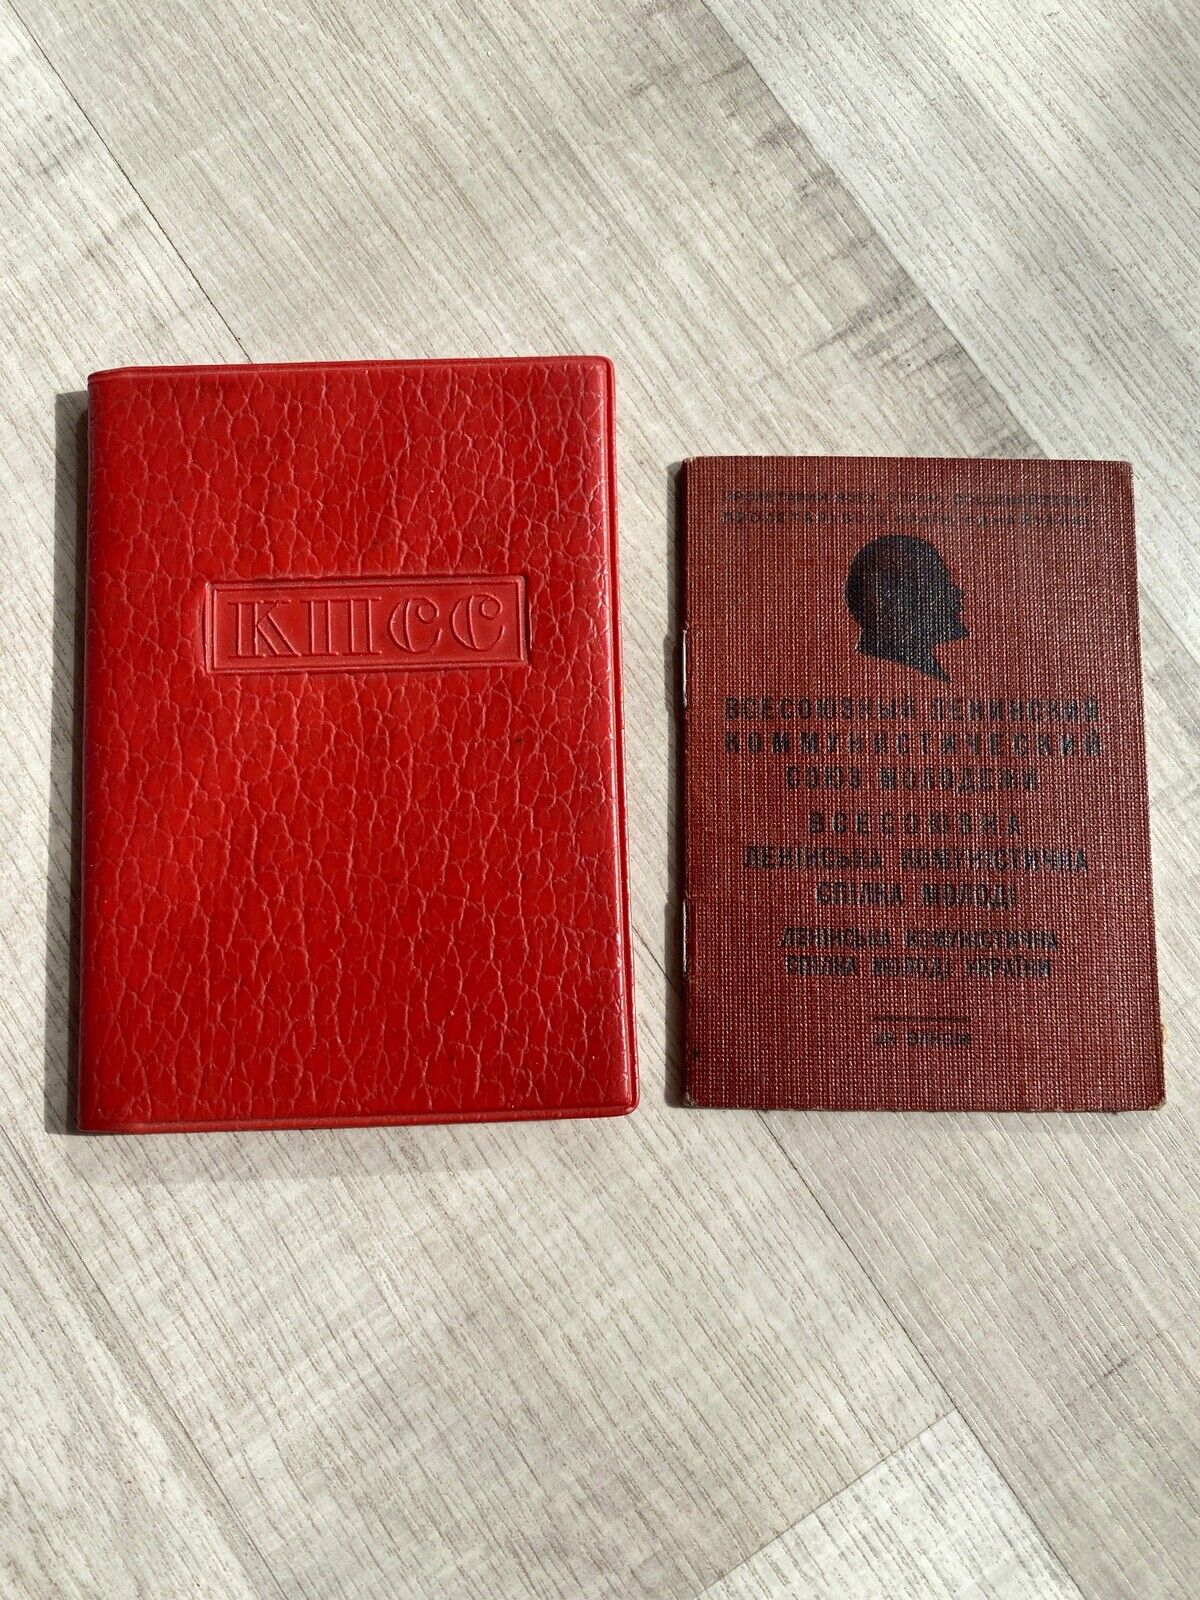 USSR SOVIET  Set of Party and Komsomol Membership Cards